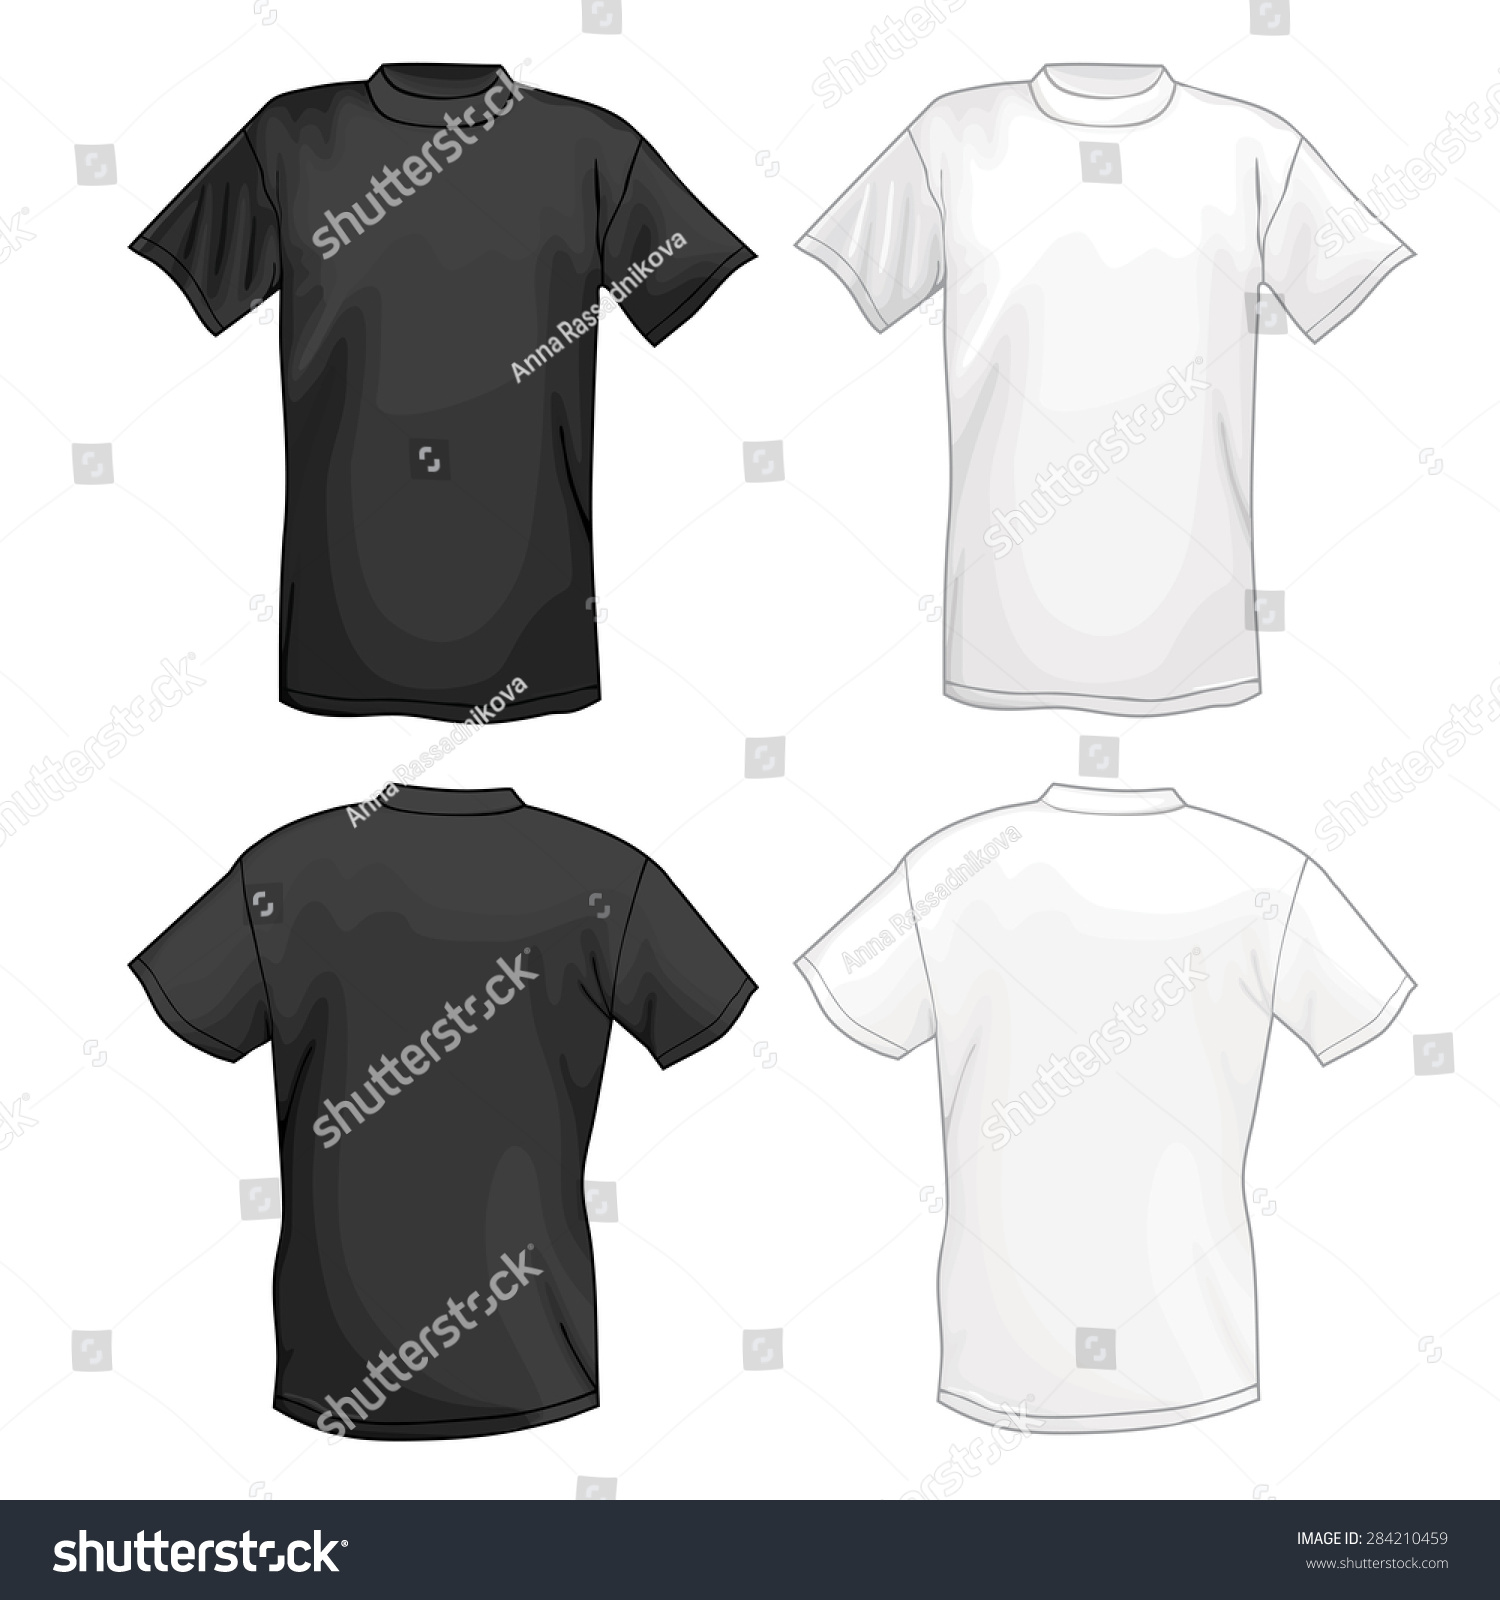 White Black Tshirt Design Template Front Stock Illustration 284210459 ...